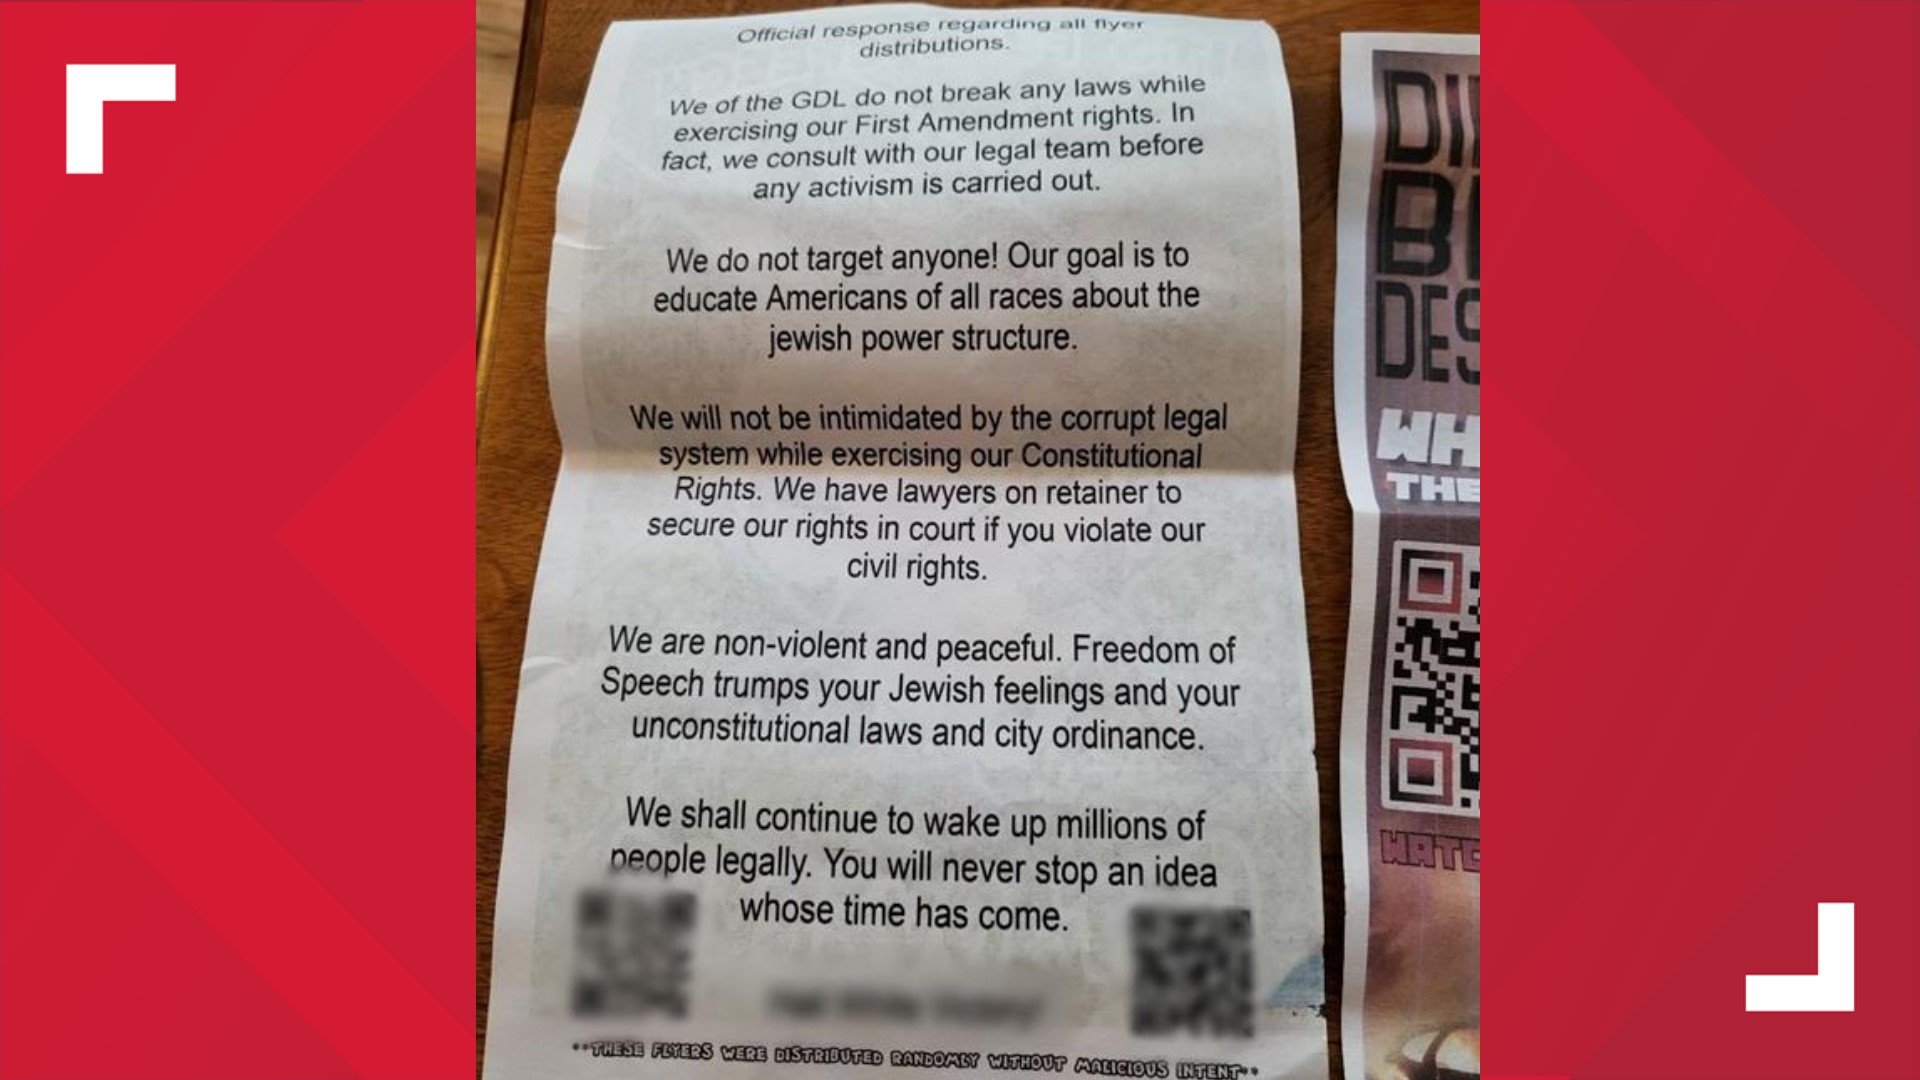 Anti-semitic flyers found in Florida neighborhood, Bibb County Sheriff’s Office investigating (13wmaz.com)